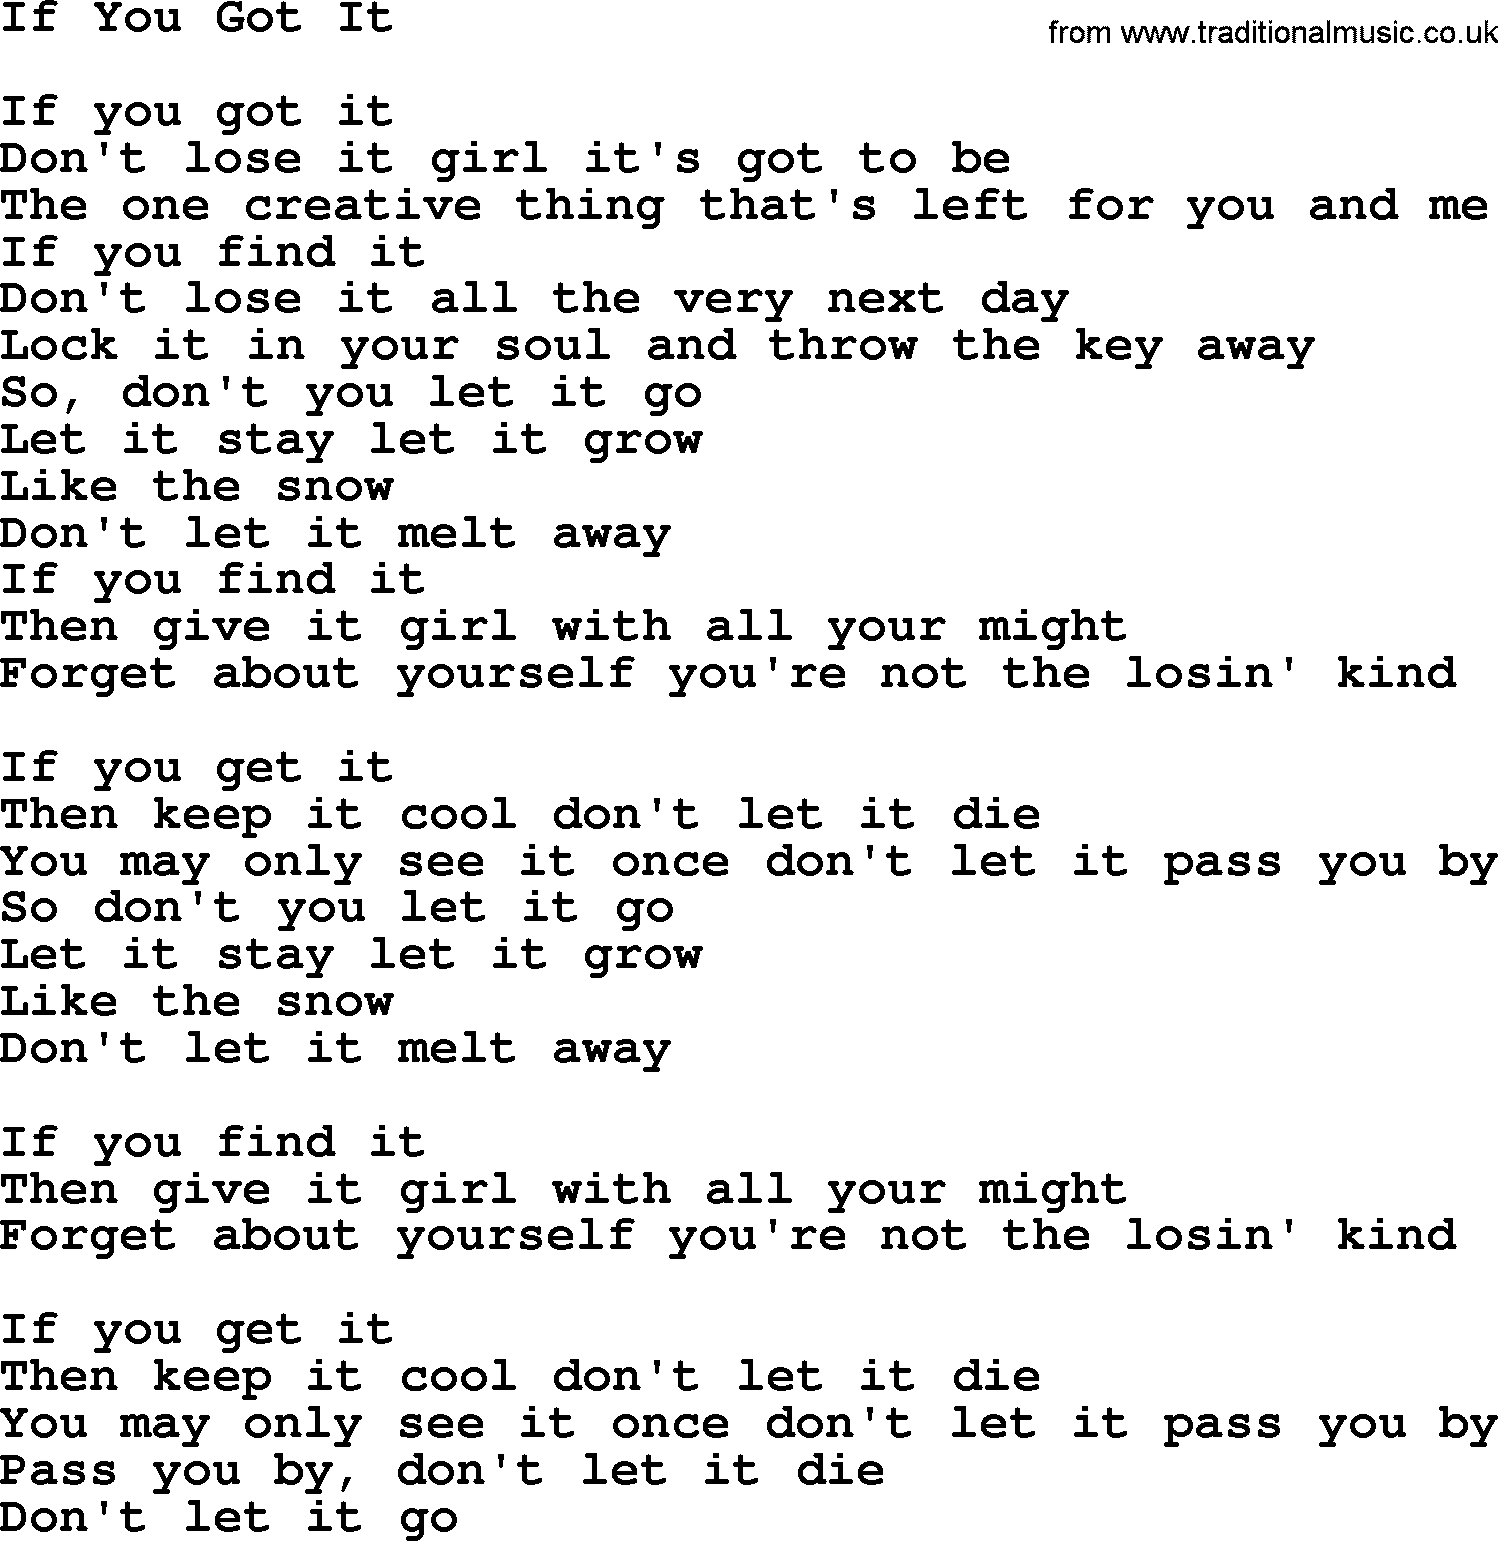 Gordon Lightfoot song If You Got It, lyrics